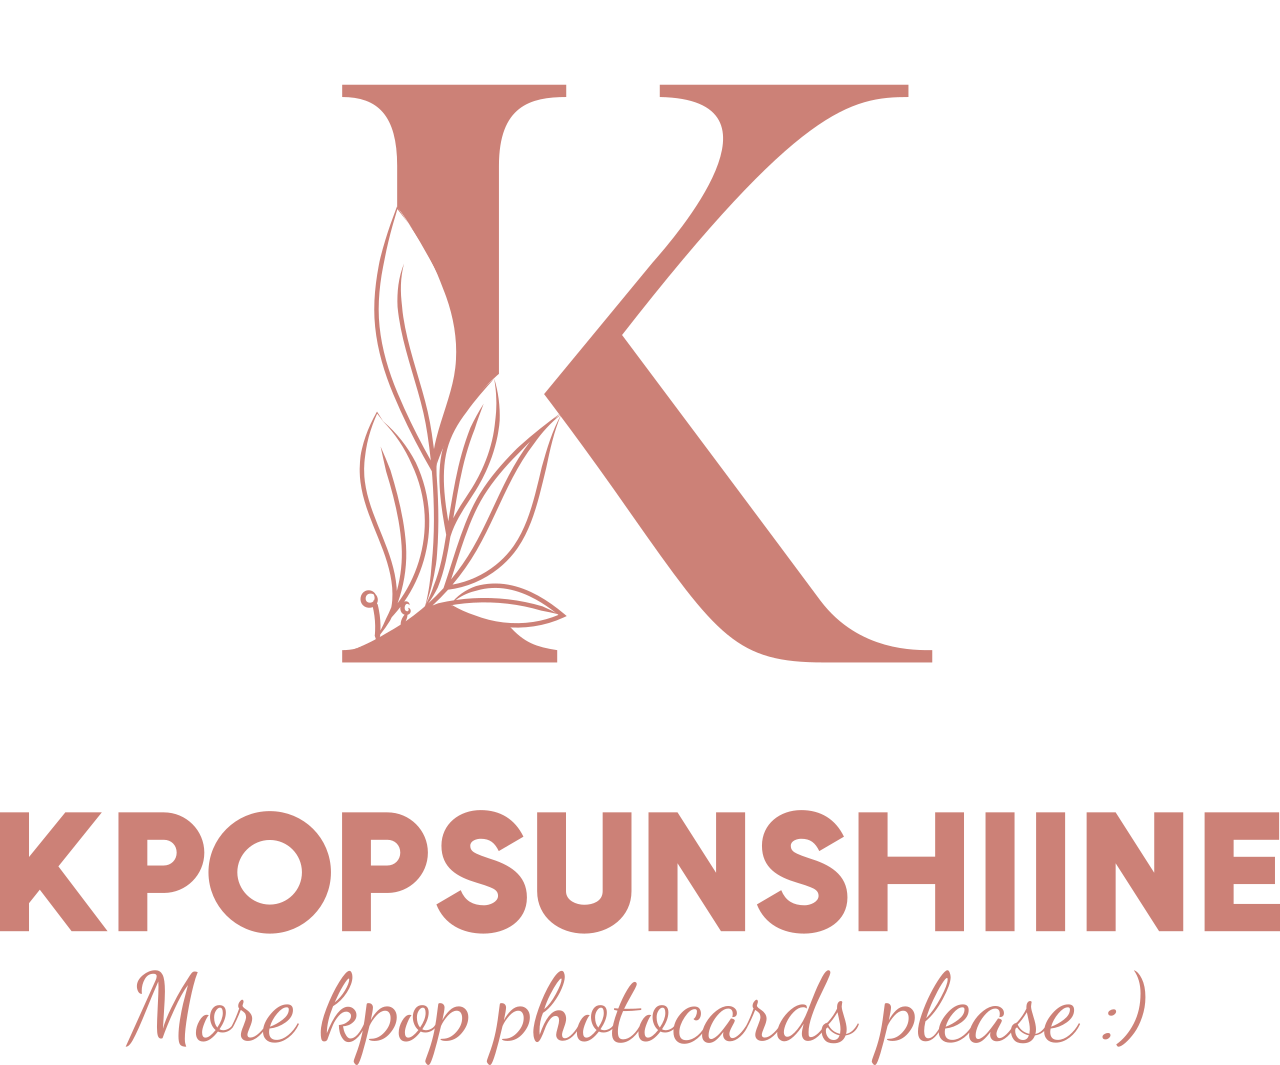 kpopsunshiine's web page